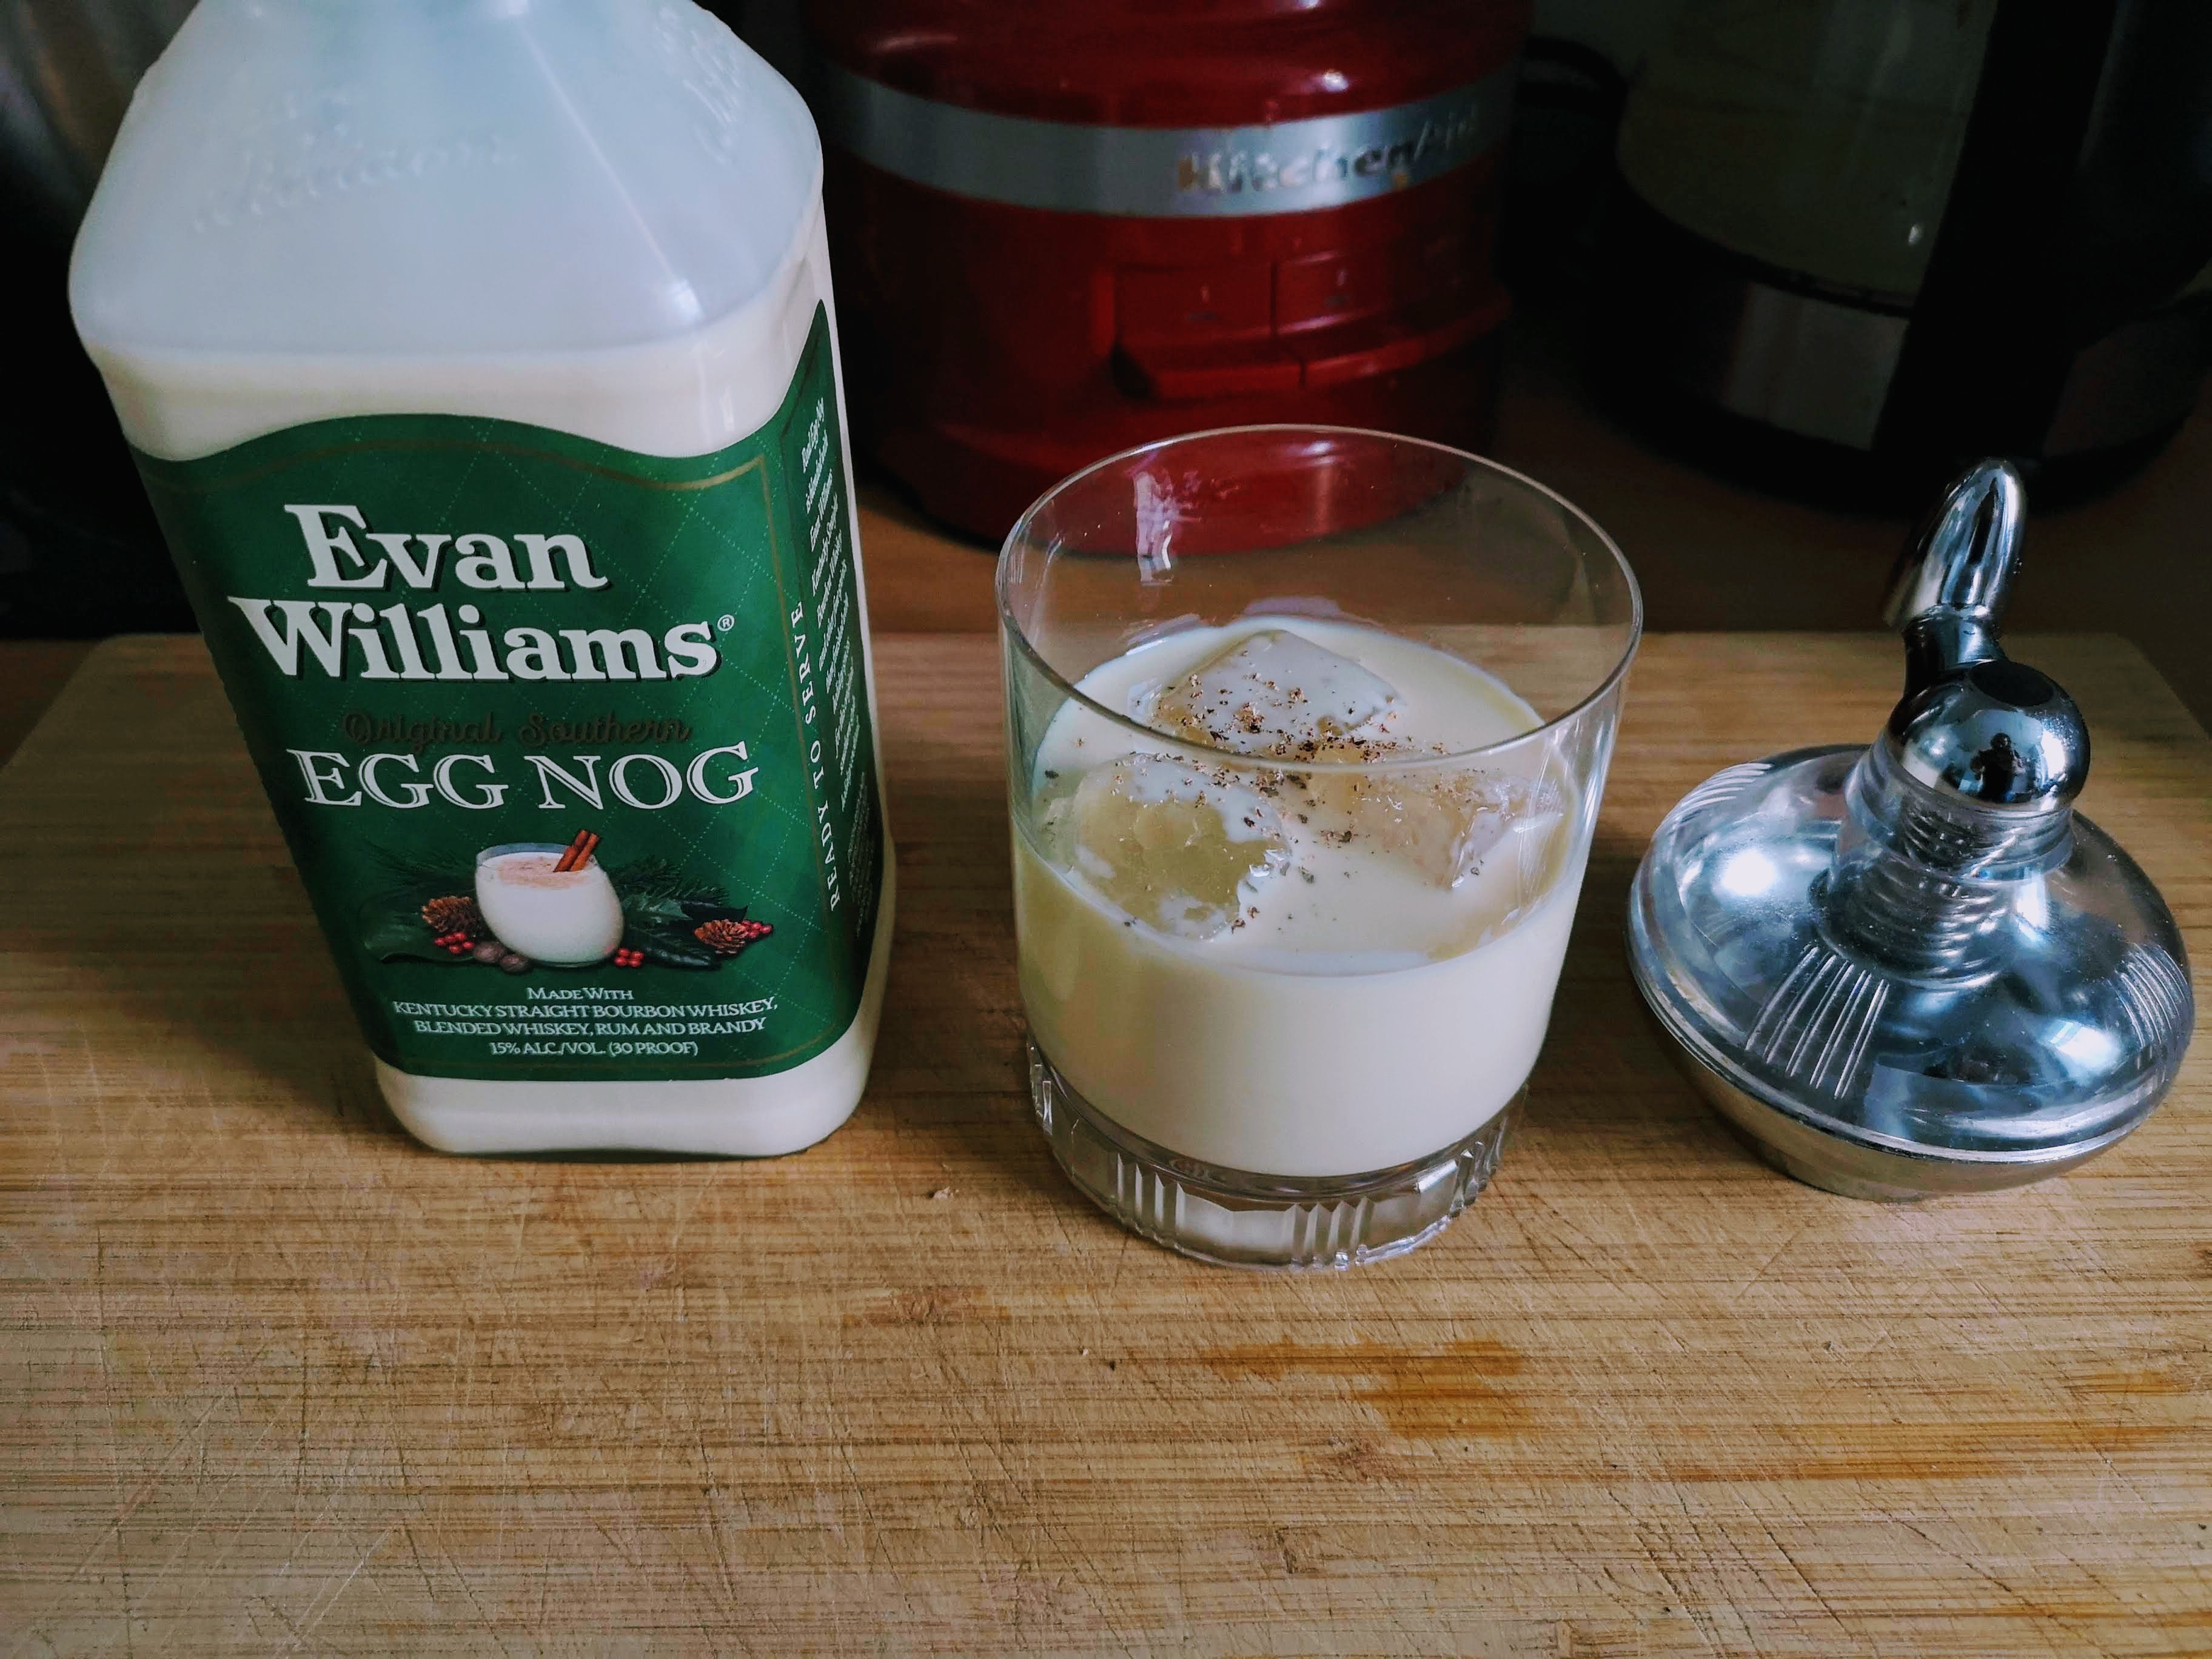 Evan Williams Original Southern Egg Nog Review